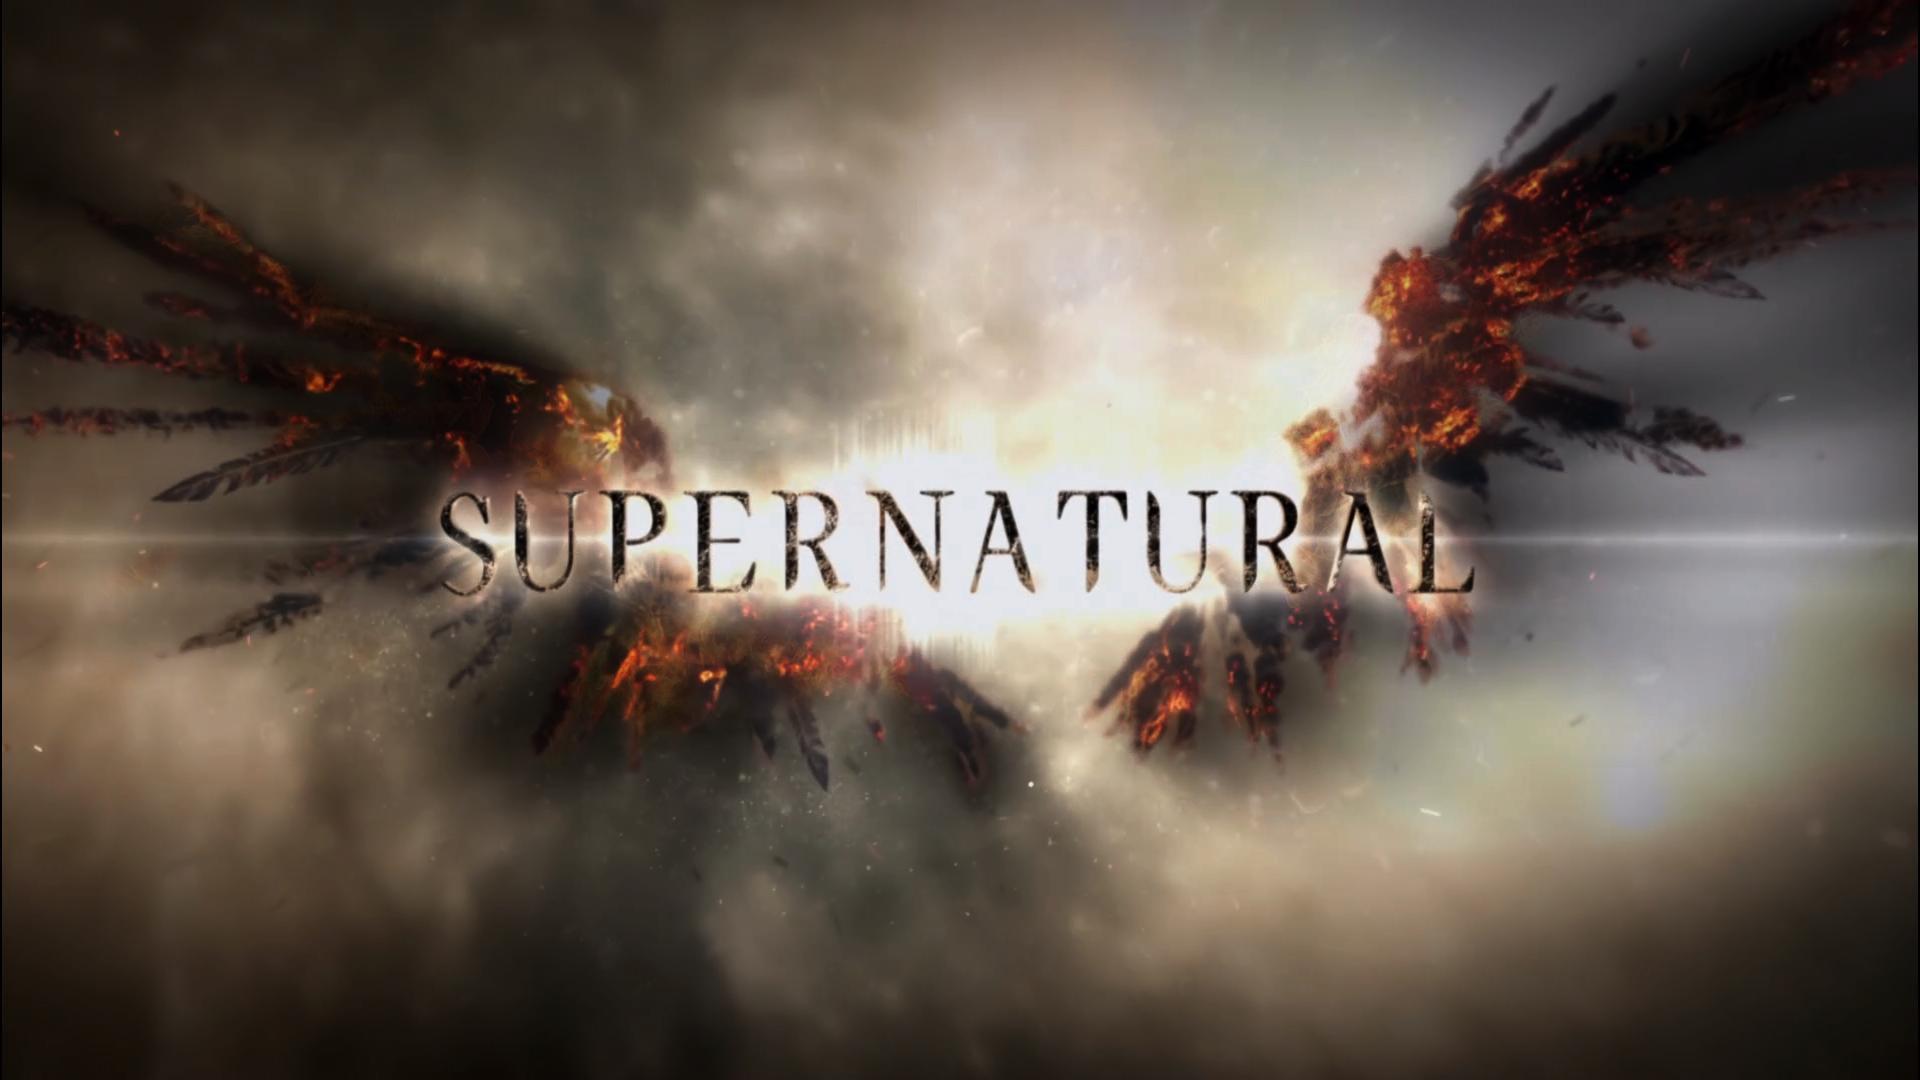 Supernatural: A blog